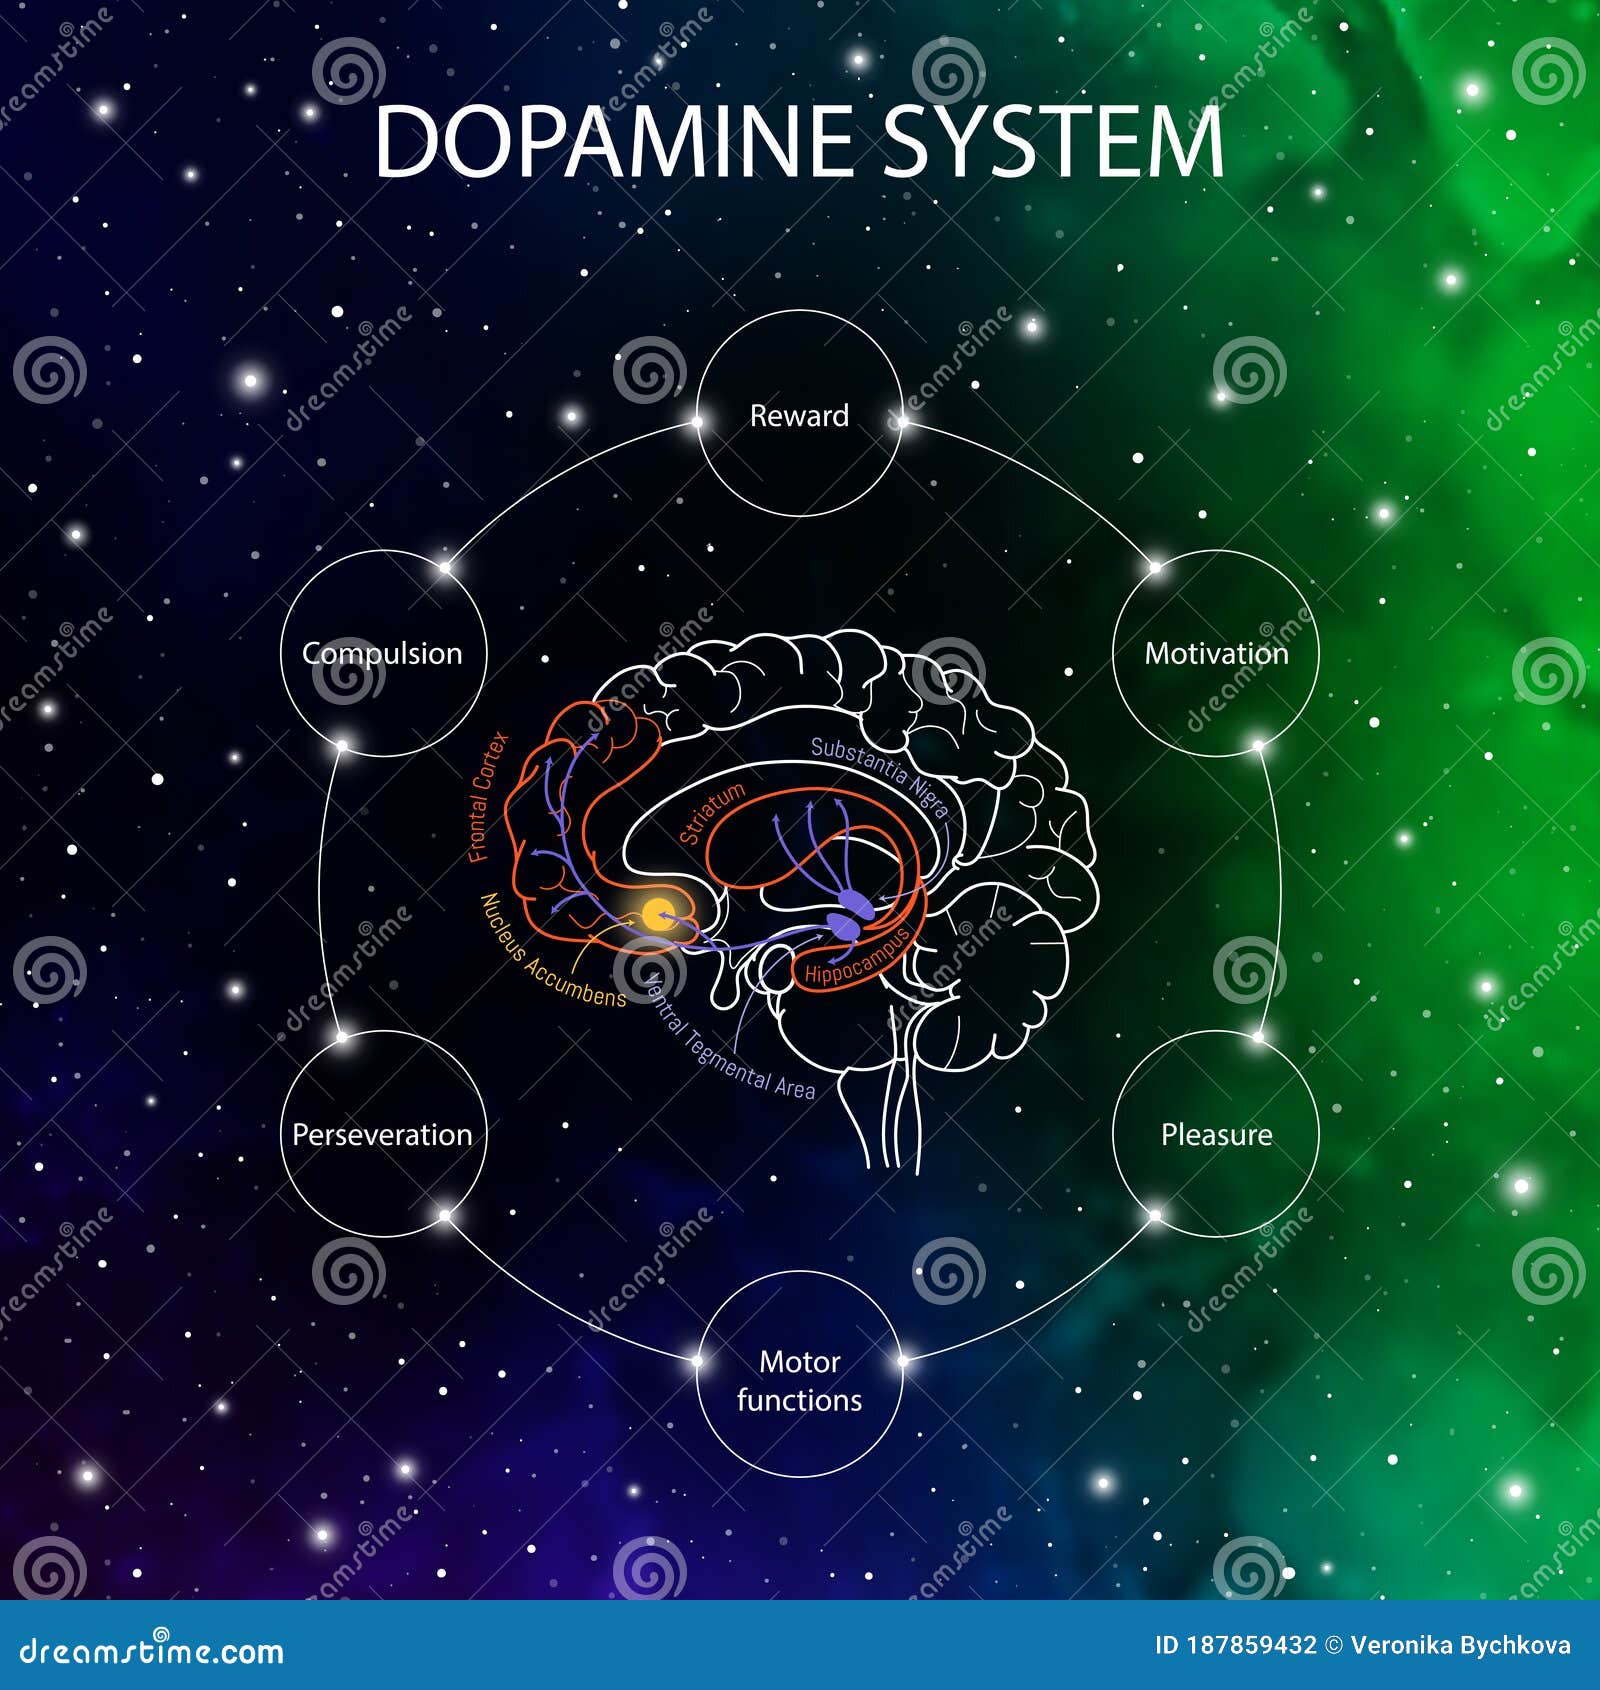 dopamine pathways in the brain. dopamine functions. neuroscience medical infographic. striatum, substantia nigra, hippocampus,